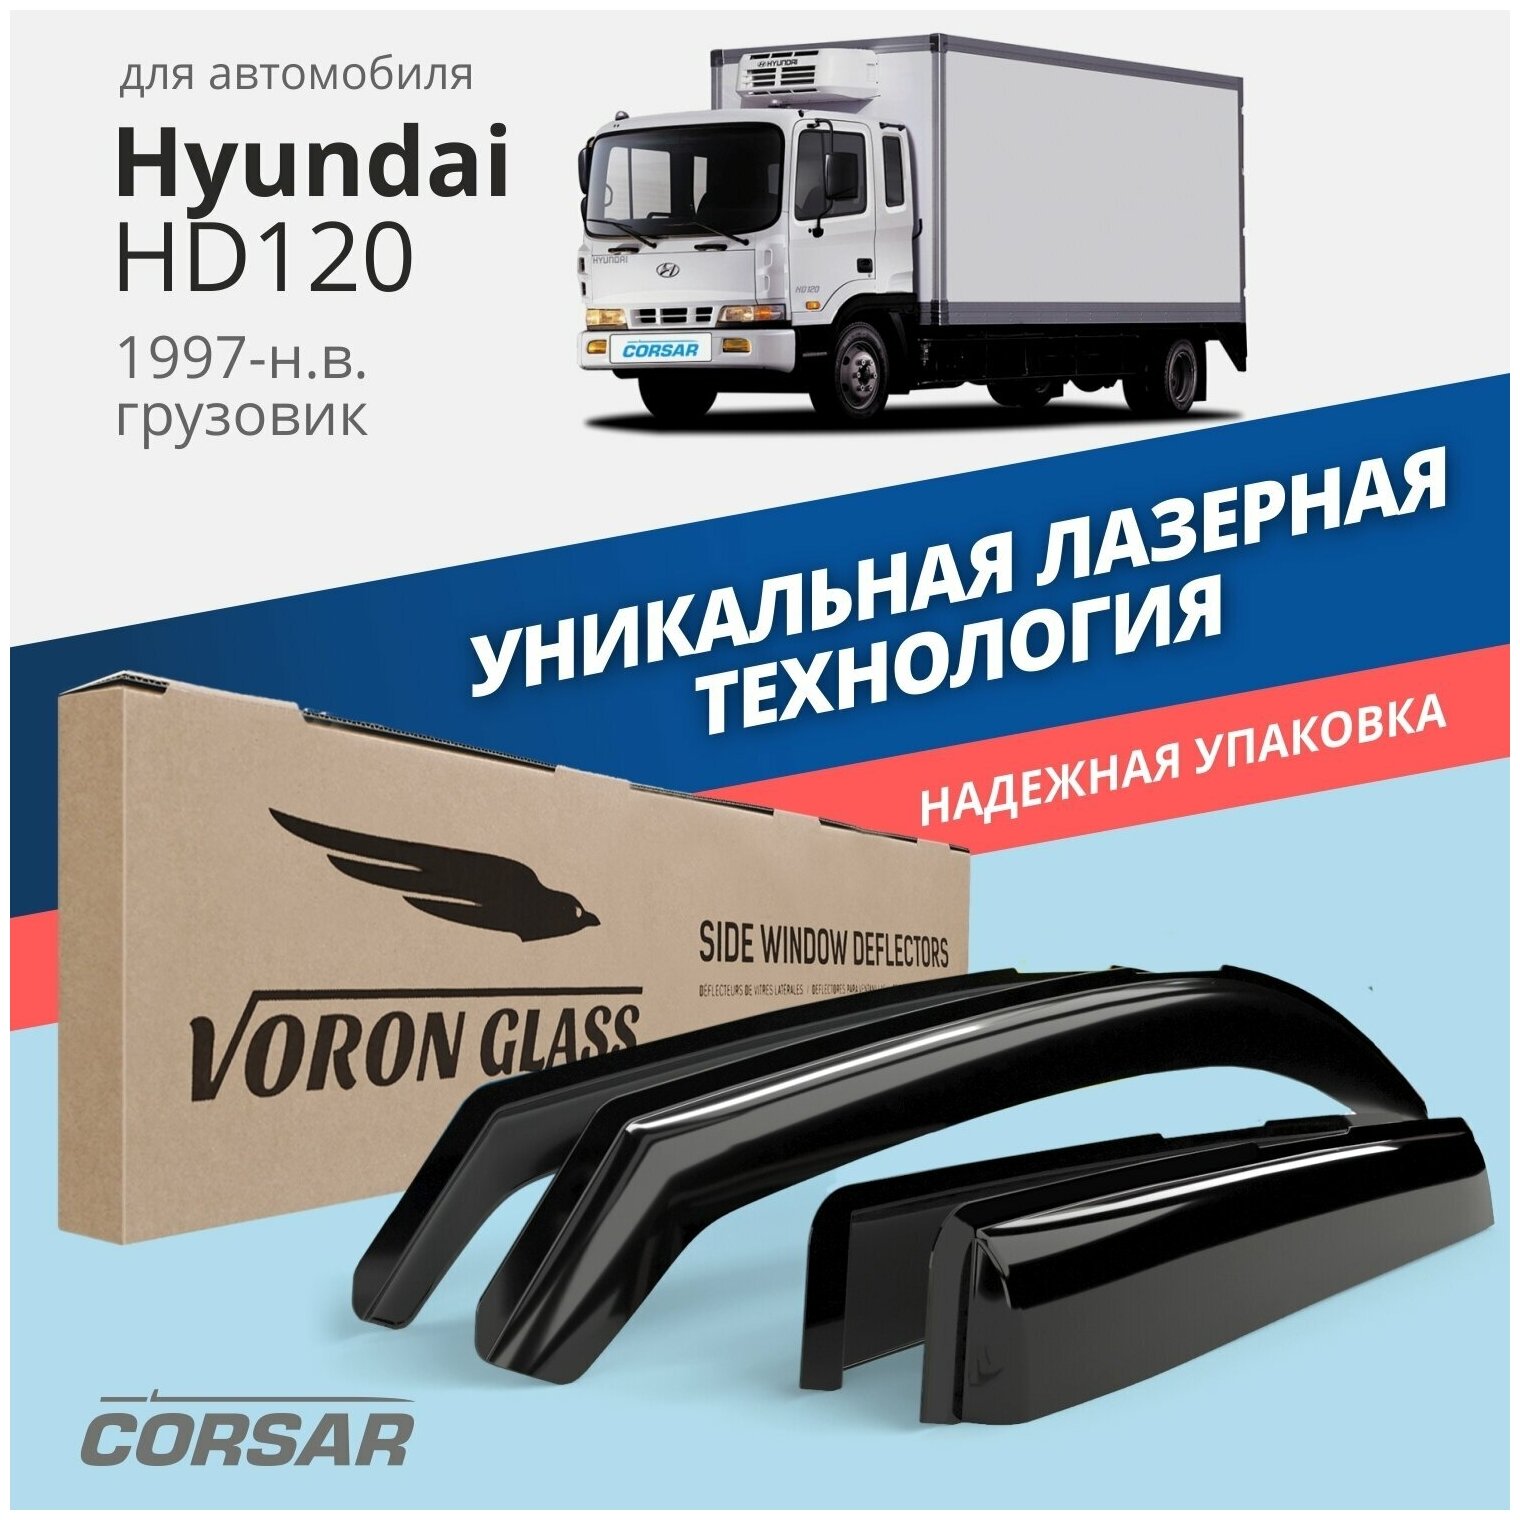 Дефлекторы на окна Voron Glass CORSAR Hyundai HD120, комплект 2шт, - фото №13